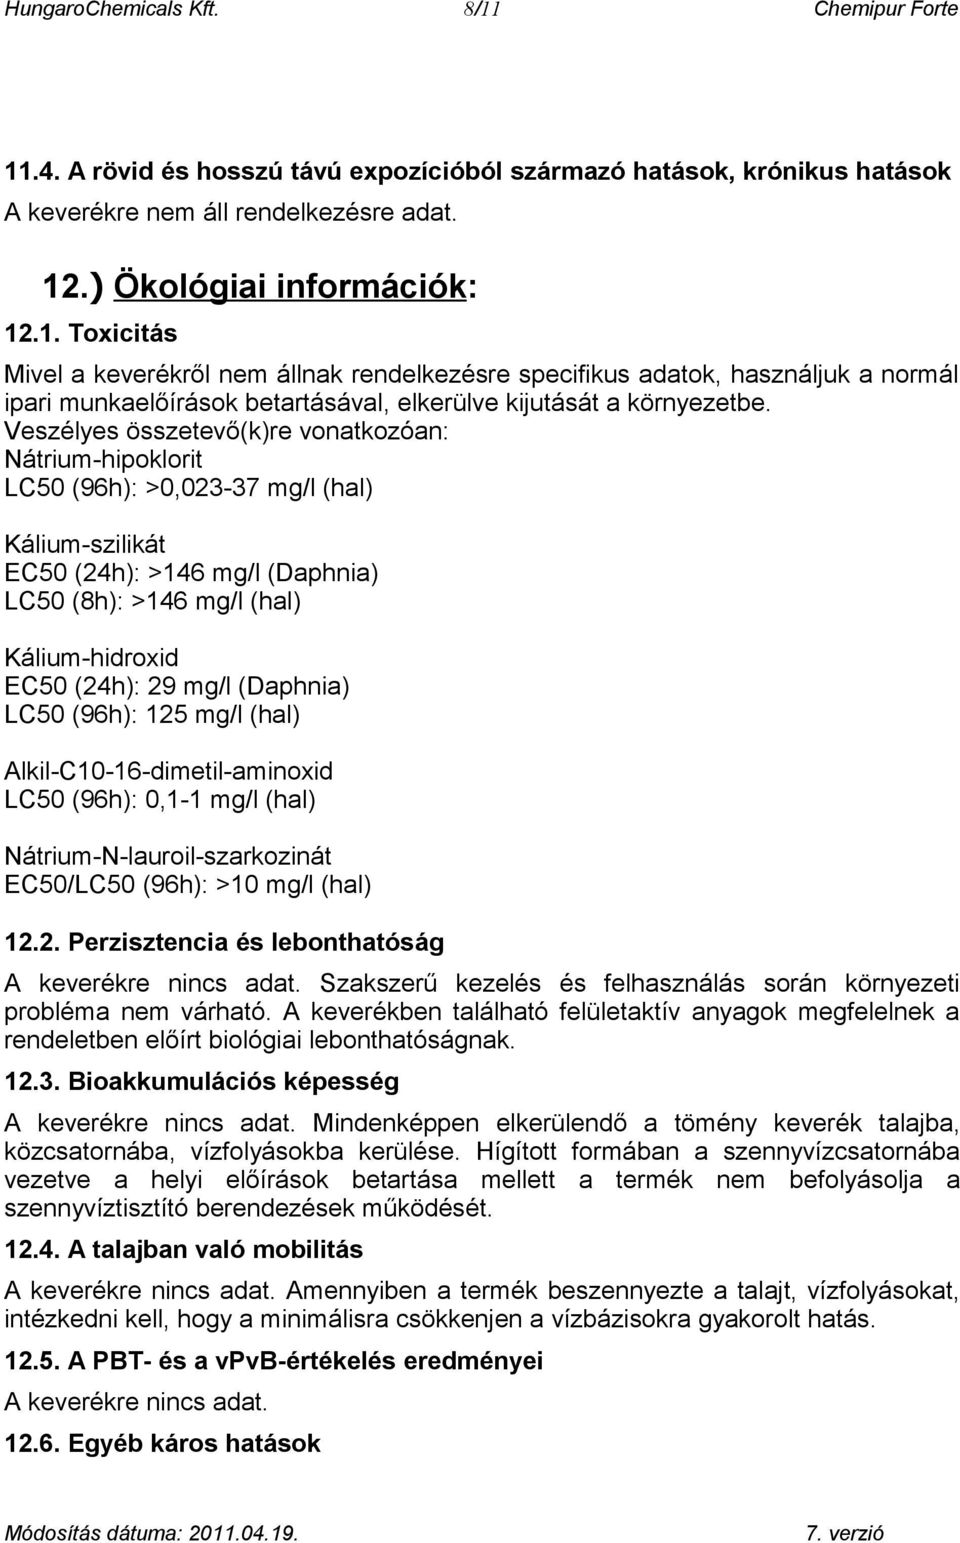 mg/l (Daphnia) LC50 (96h): 125 mg/l (hal) Alkil-C10-16-dimetil-aminoxid LC50 (96h): 0,1-1 mg/l (hal) Nátrium-N-lauroil-szarkozinát EC50/LC50 (96h): >10 mg/l (hal) 12.2. Perzisztencia és lebonthatóság A keverékre.